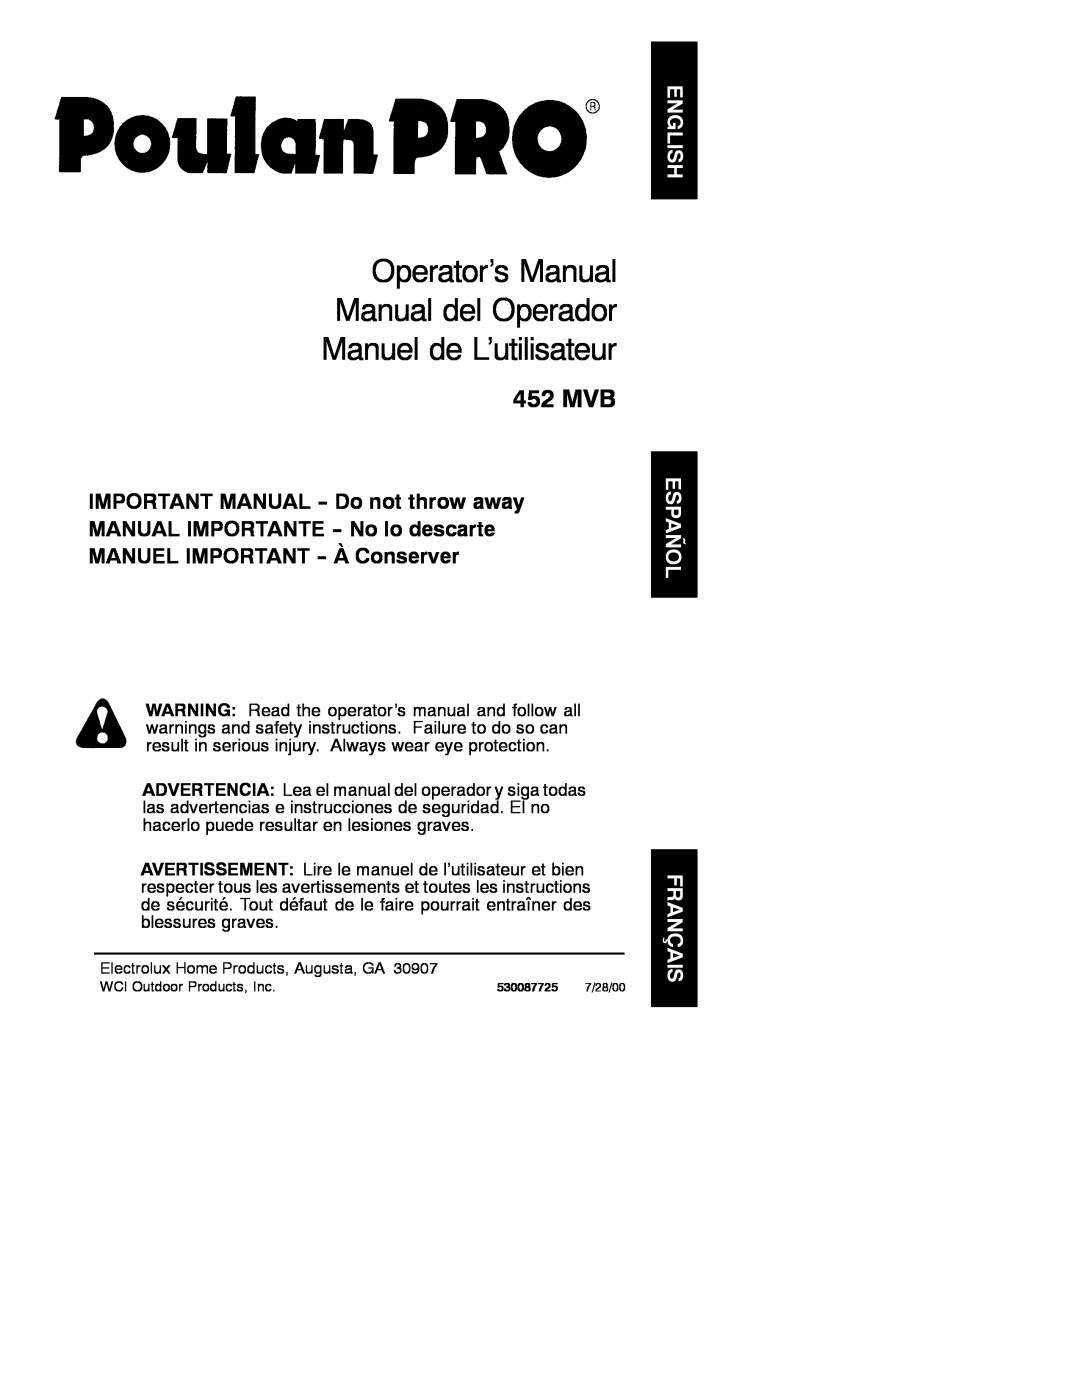 Poulan 530087725 manual Operator’s Manual Manual del Operador Manuel de L’utilisateur, 452 MVB 